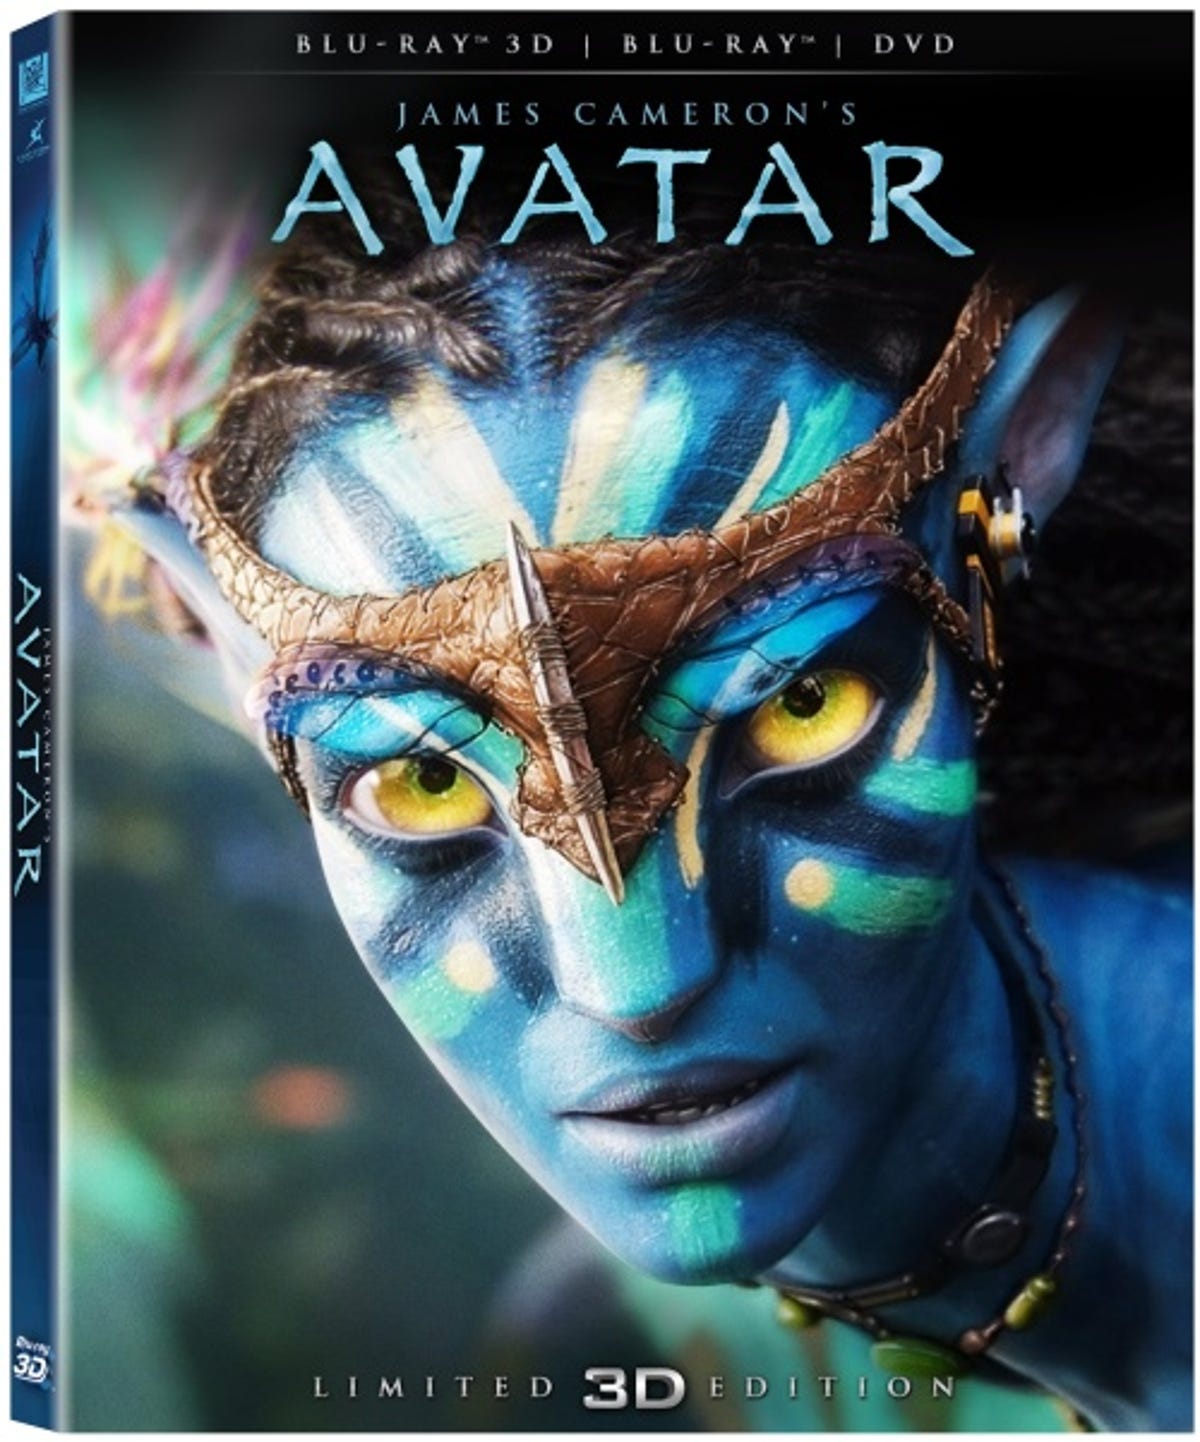 Avatar 3D